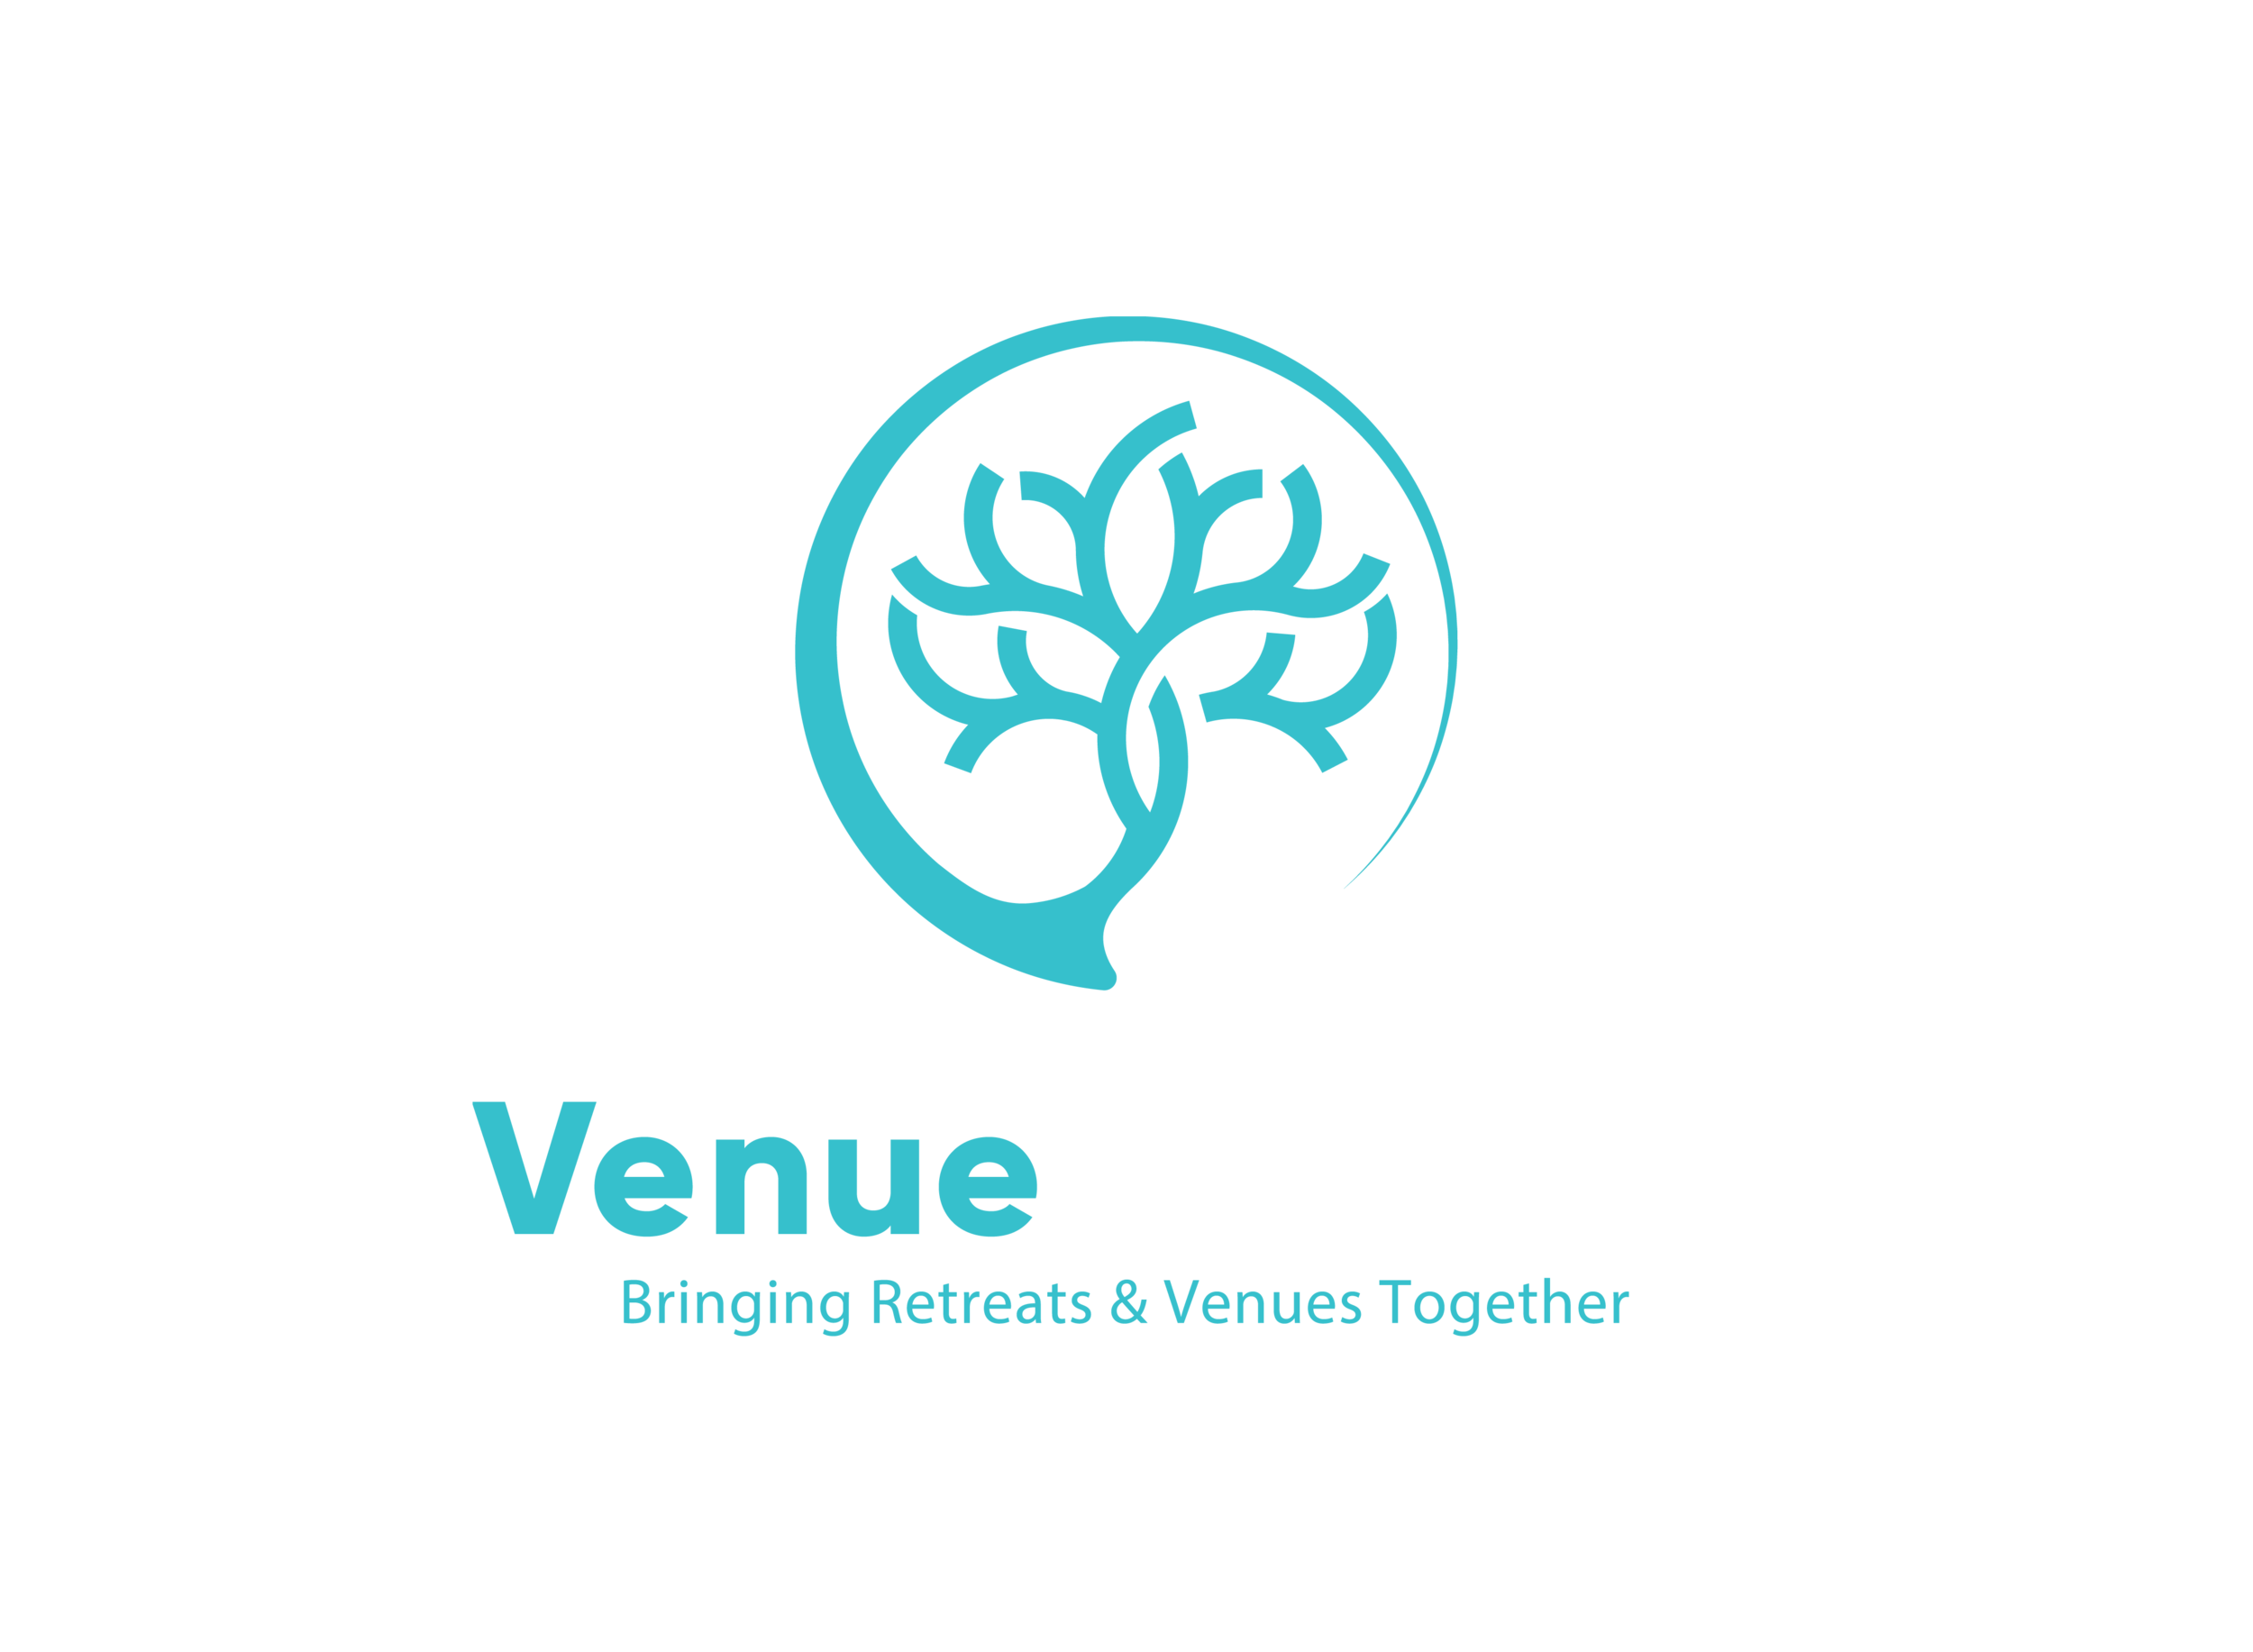 Venue Retreat